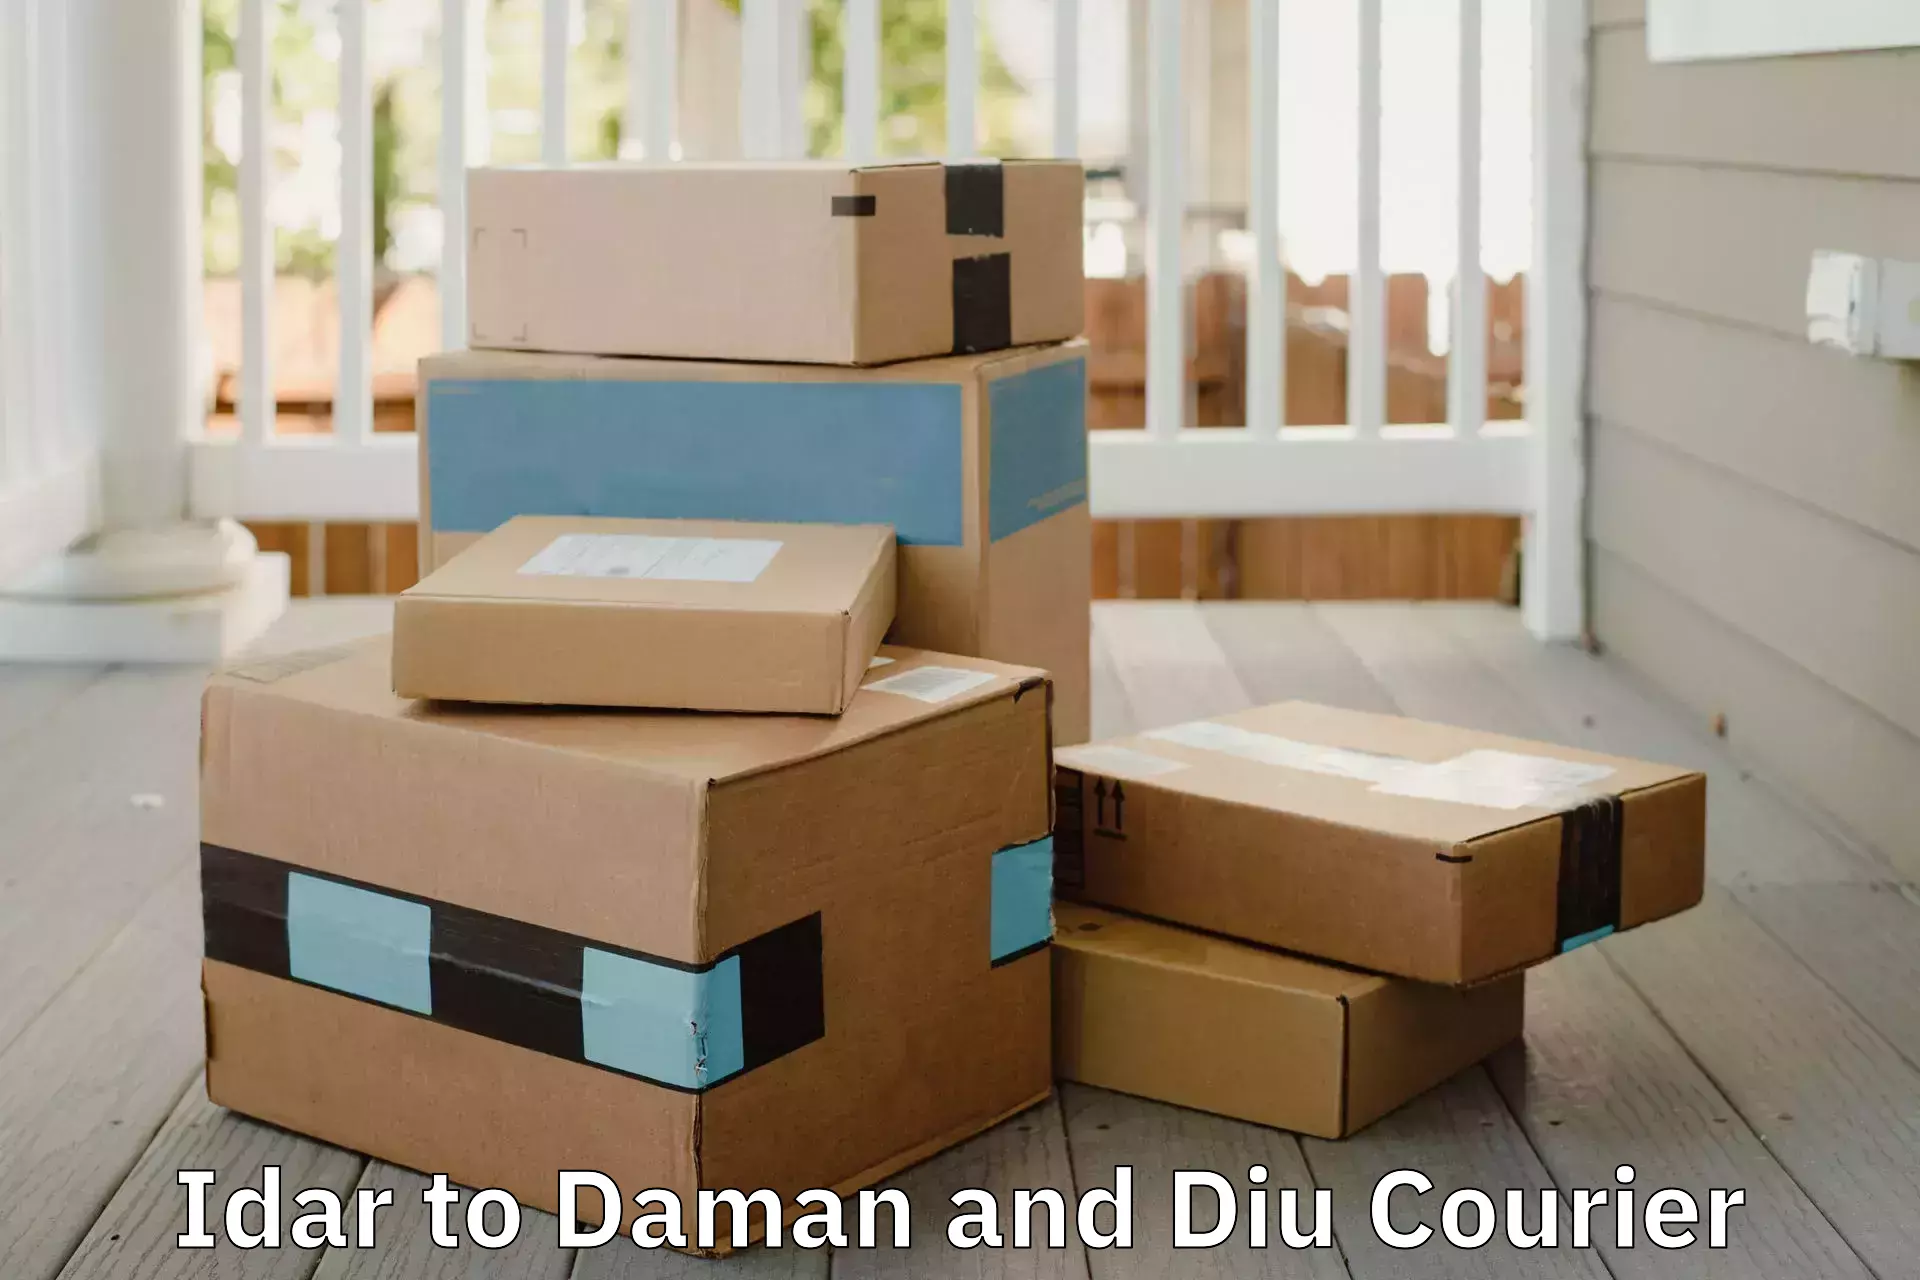 Home goods moving company Idar to Diu